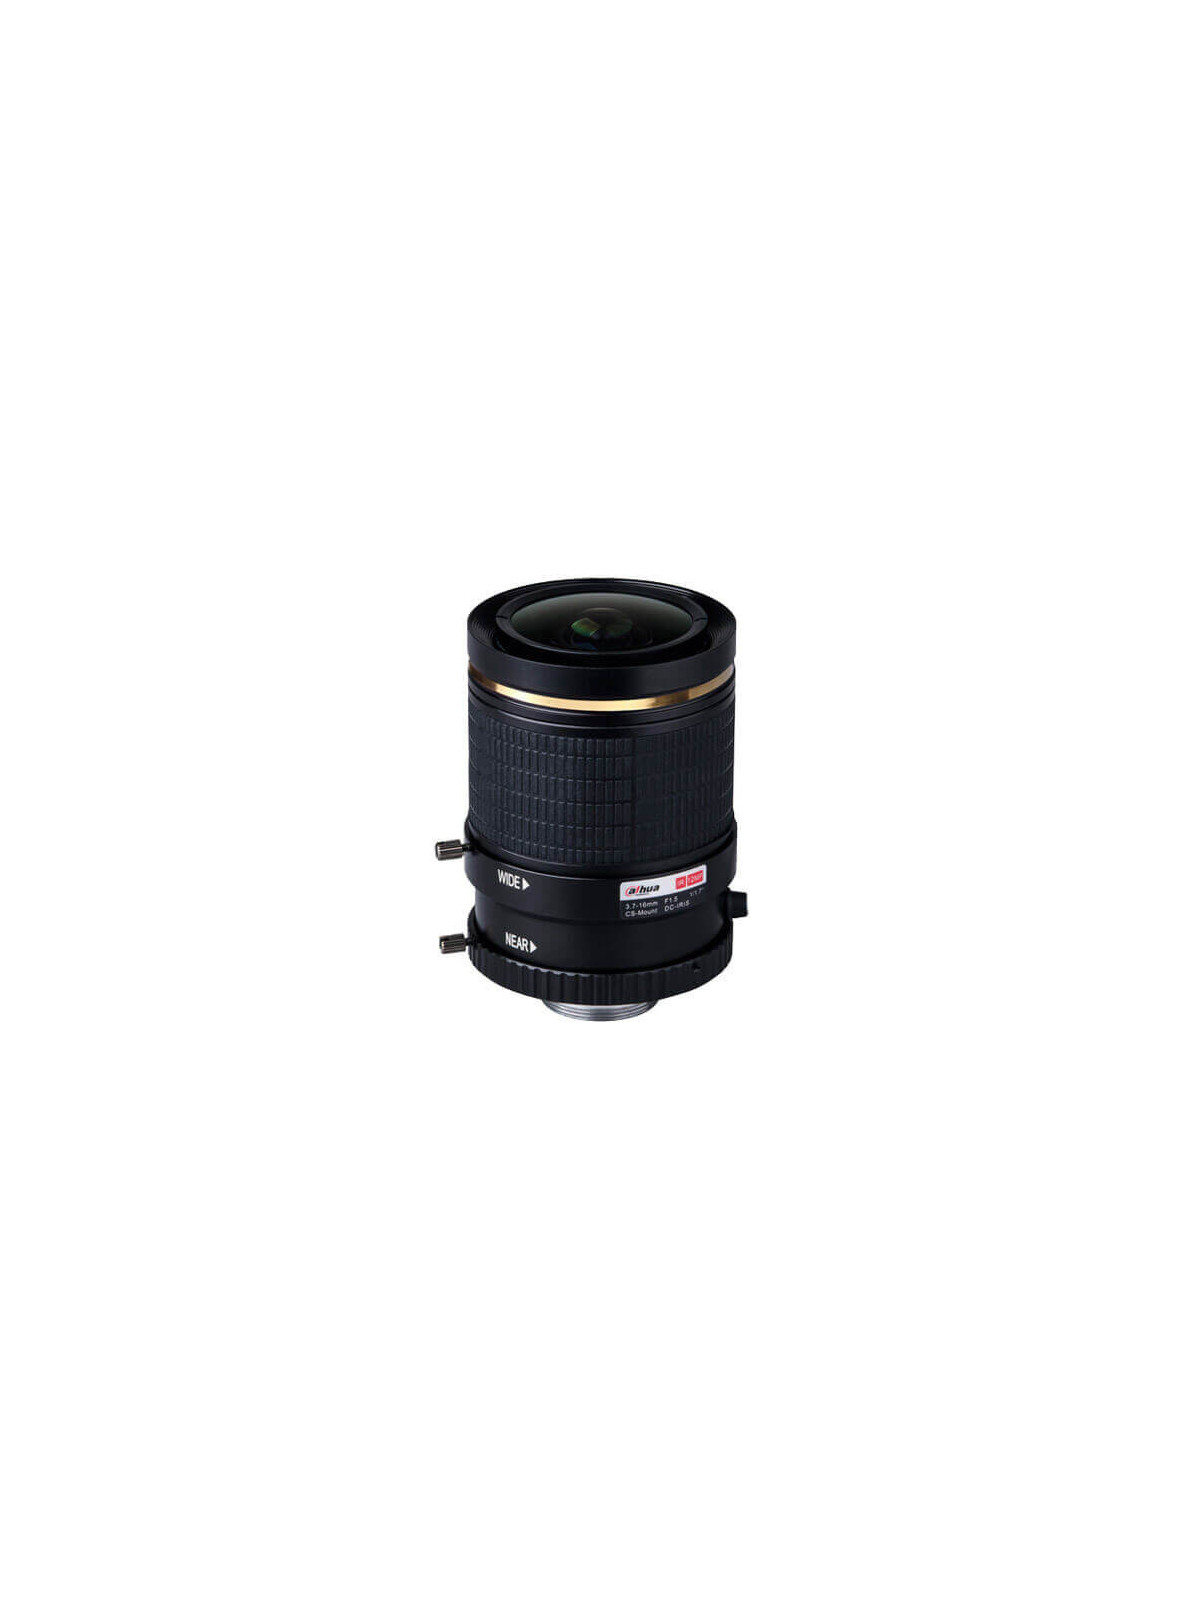 Óptica varifocal auto iris para cámara 3.7 - 16mm LN03-16DC-12MP